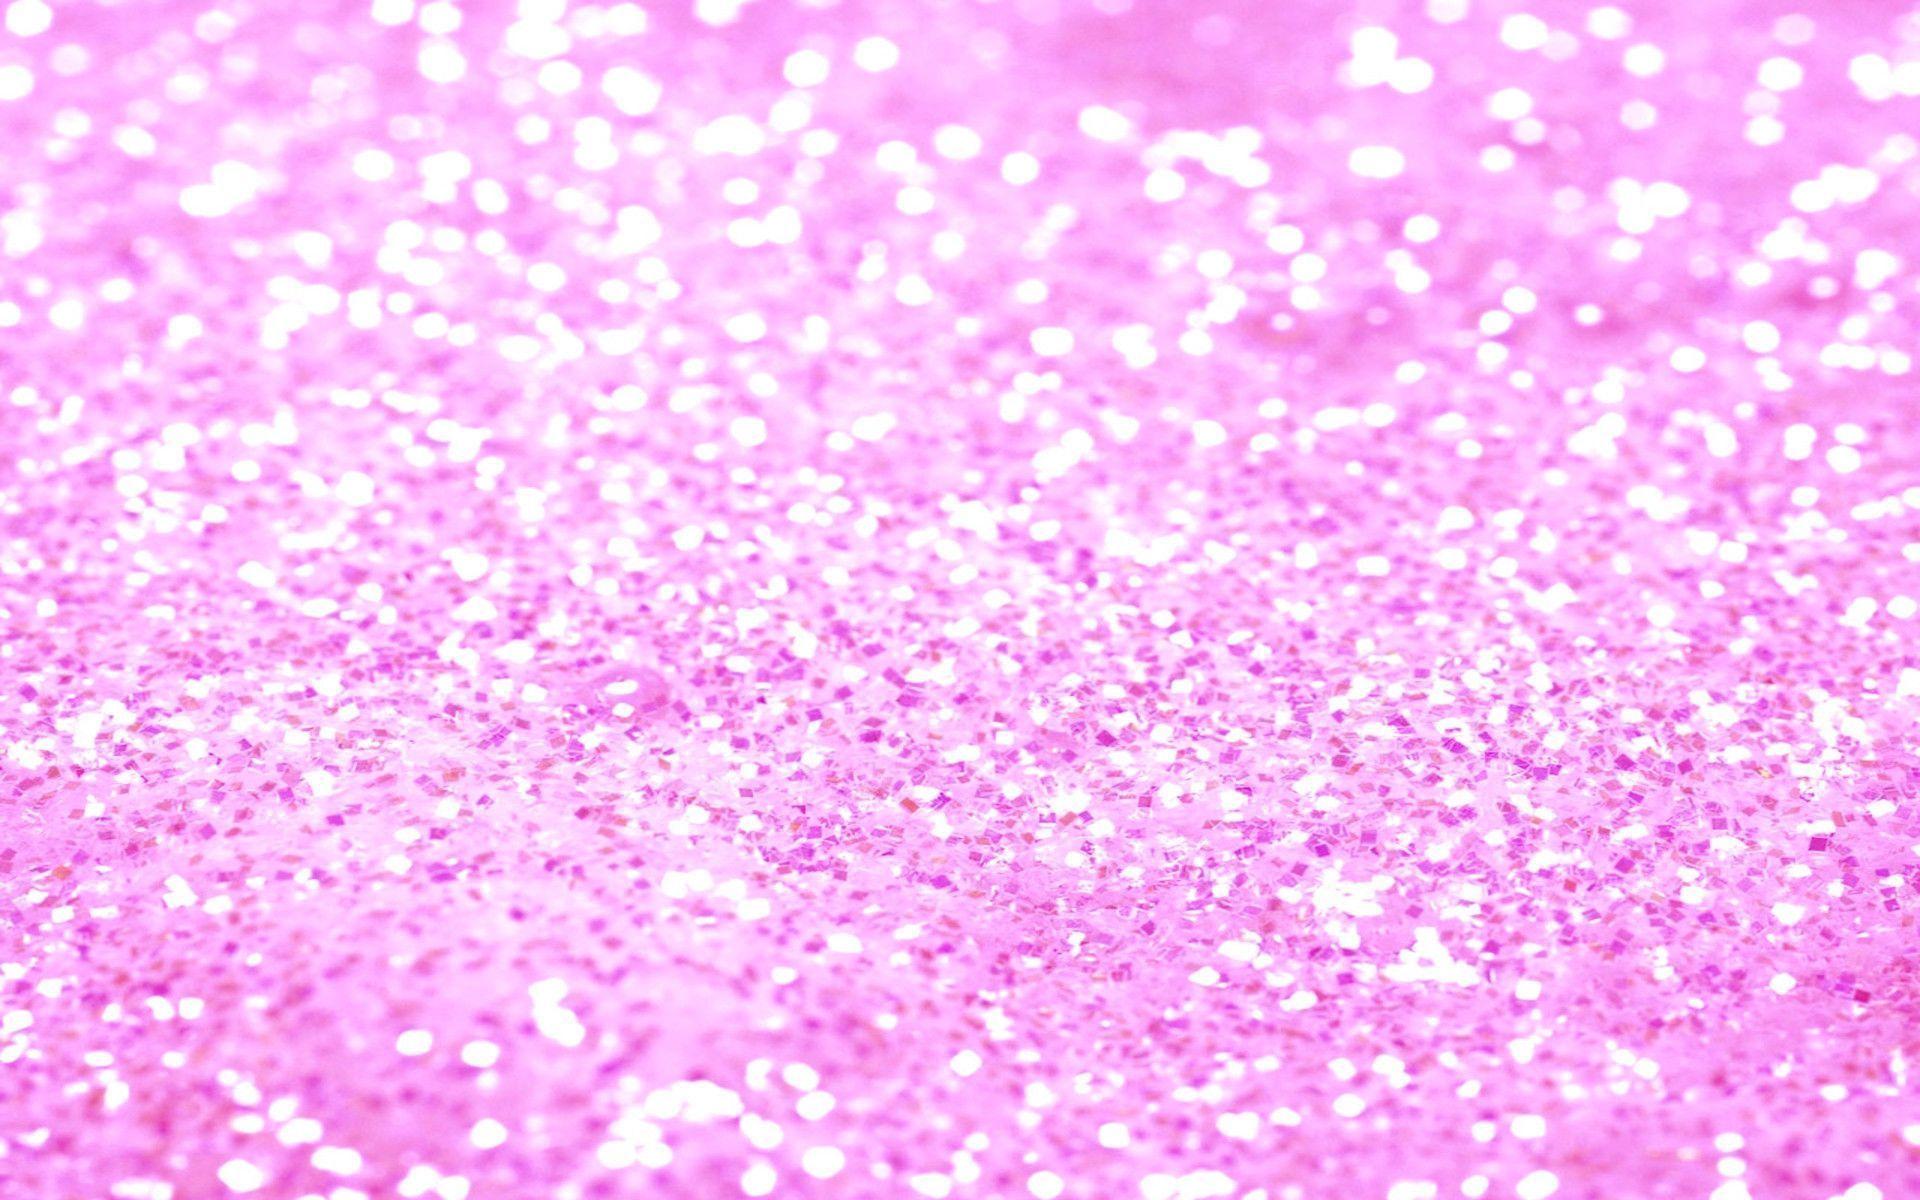 Background Pink Glitter Image